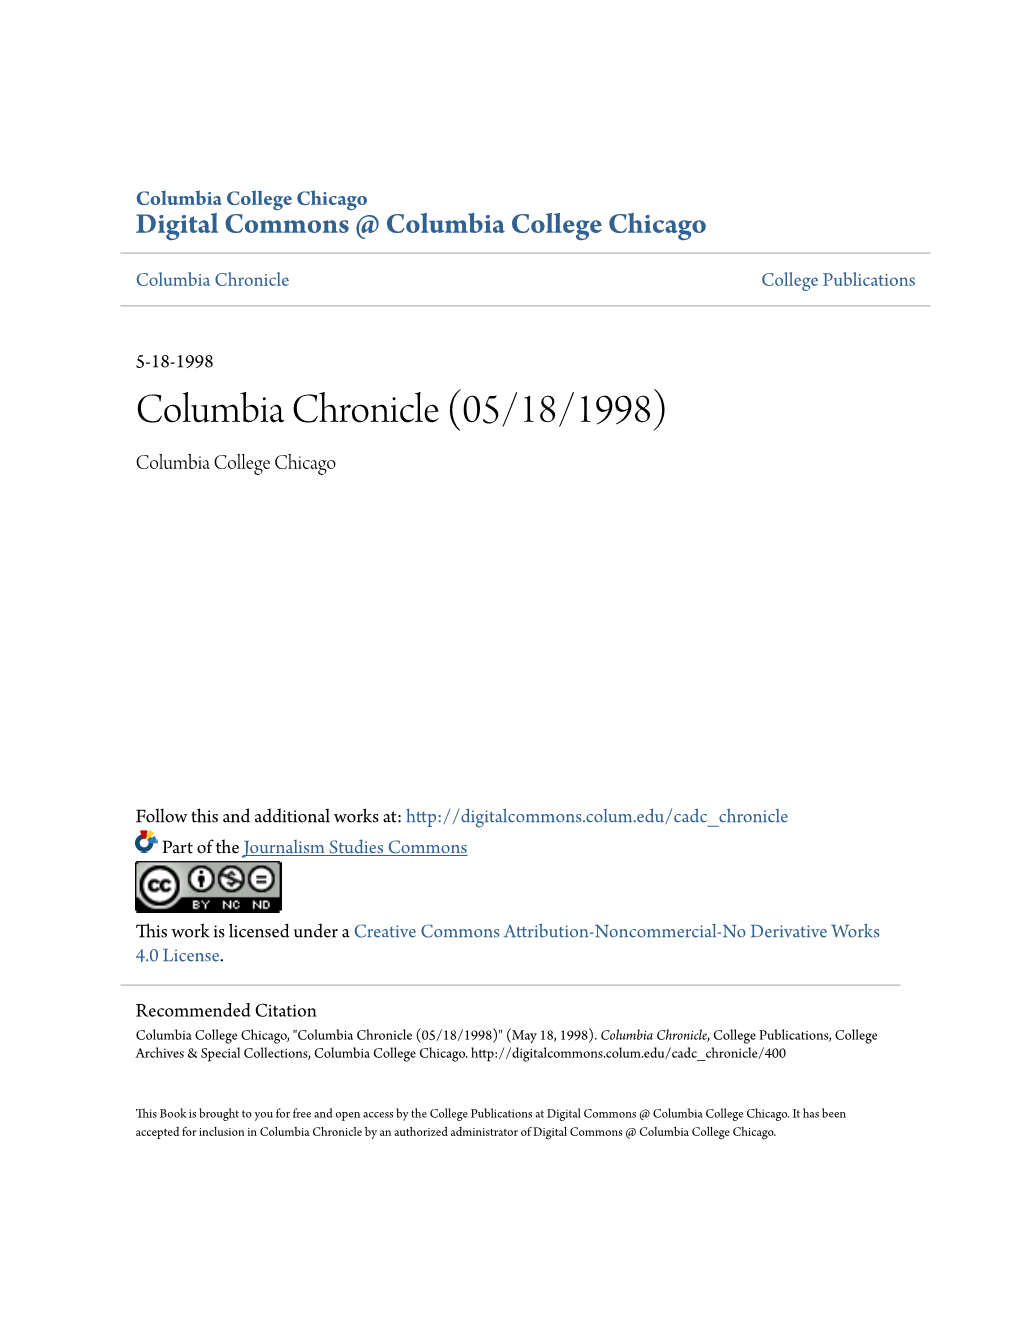 Columbia Chronicle (05/18/1998) Columbia College Chicago